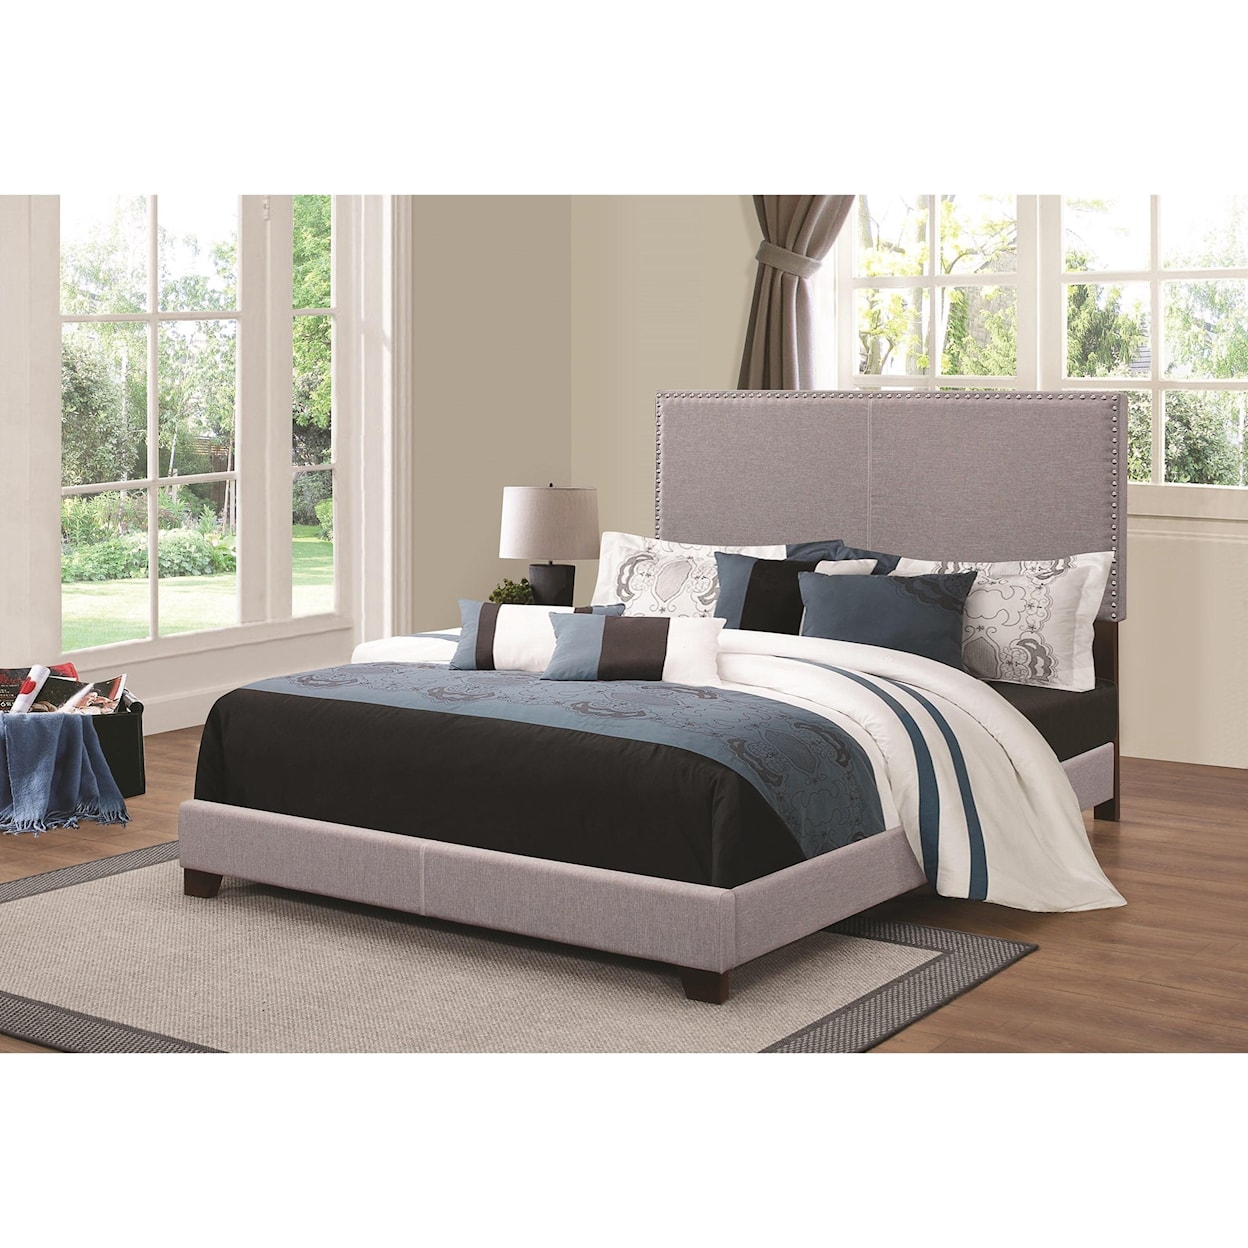 Coaster Upholstered Beds Full Bed